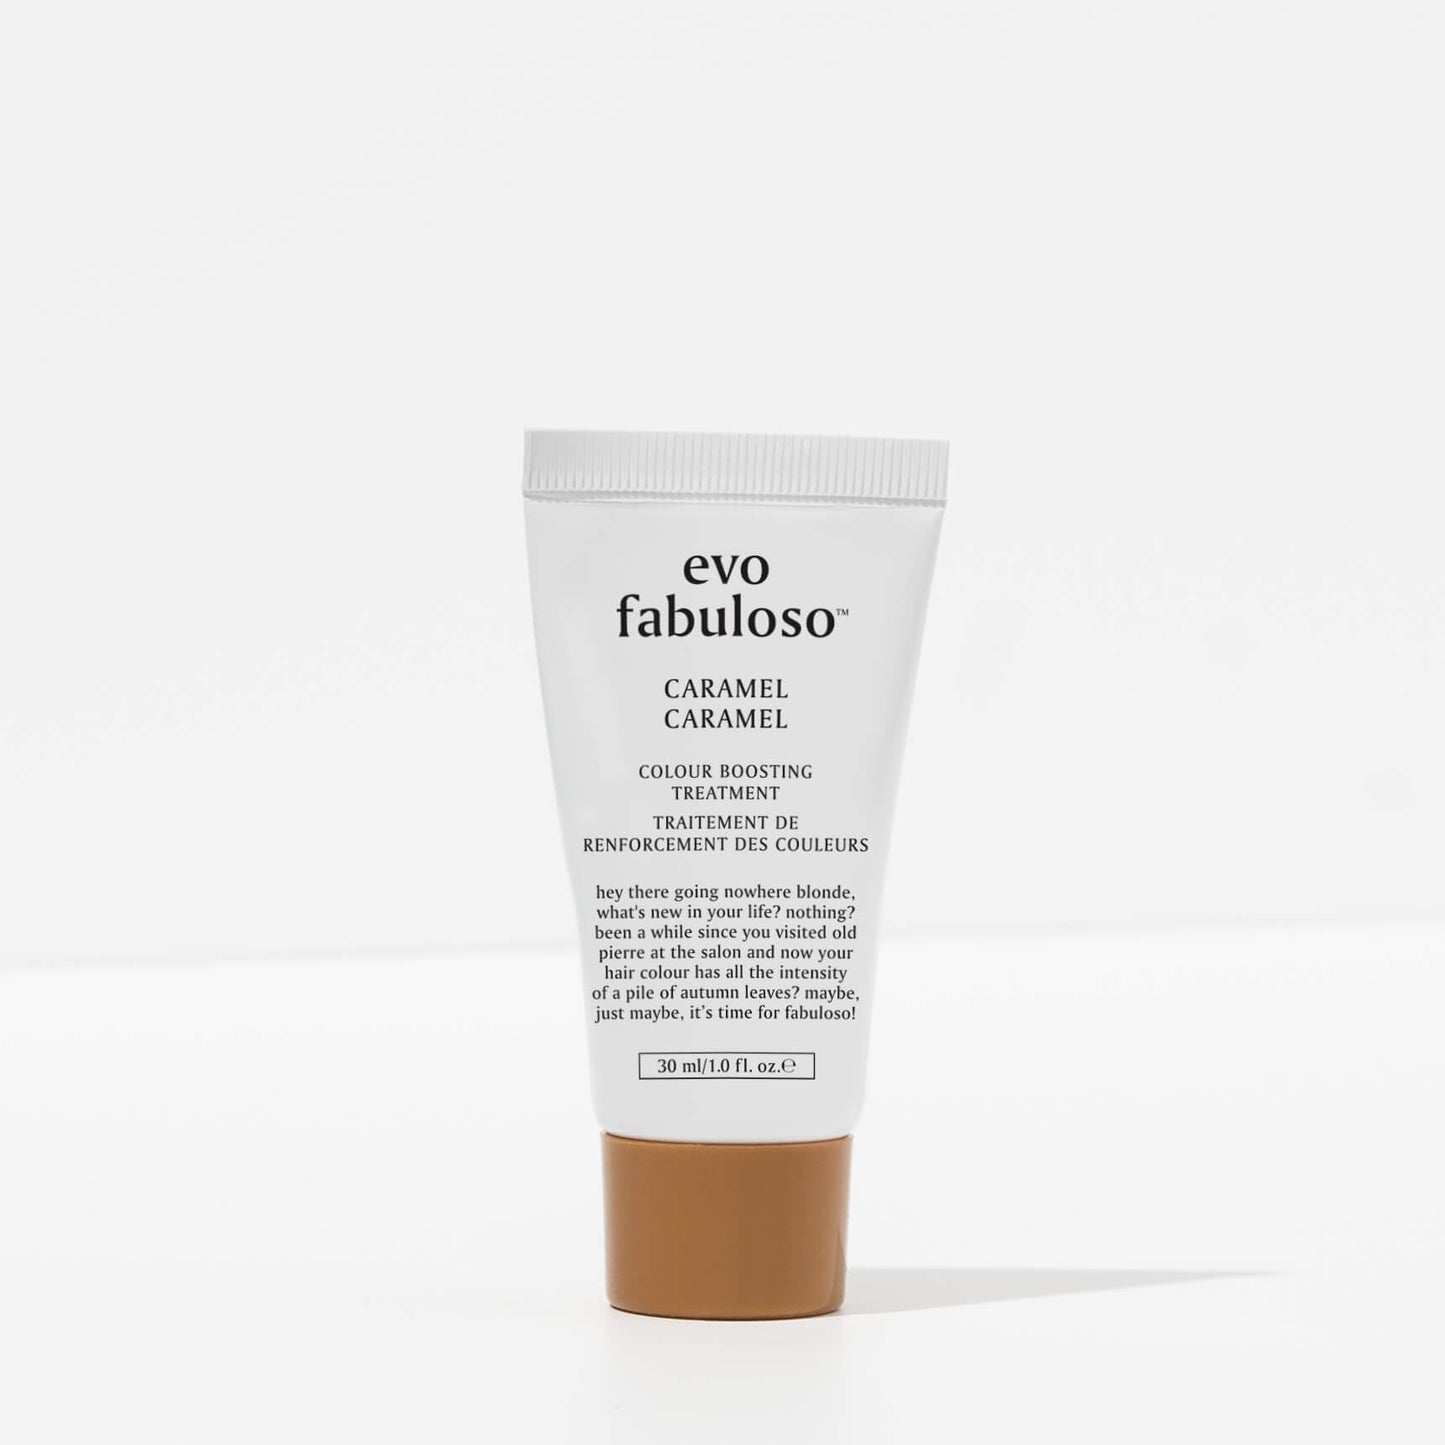 EVO fabuloso caramel colour boosting treatment 30ml - shelley and co